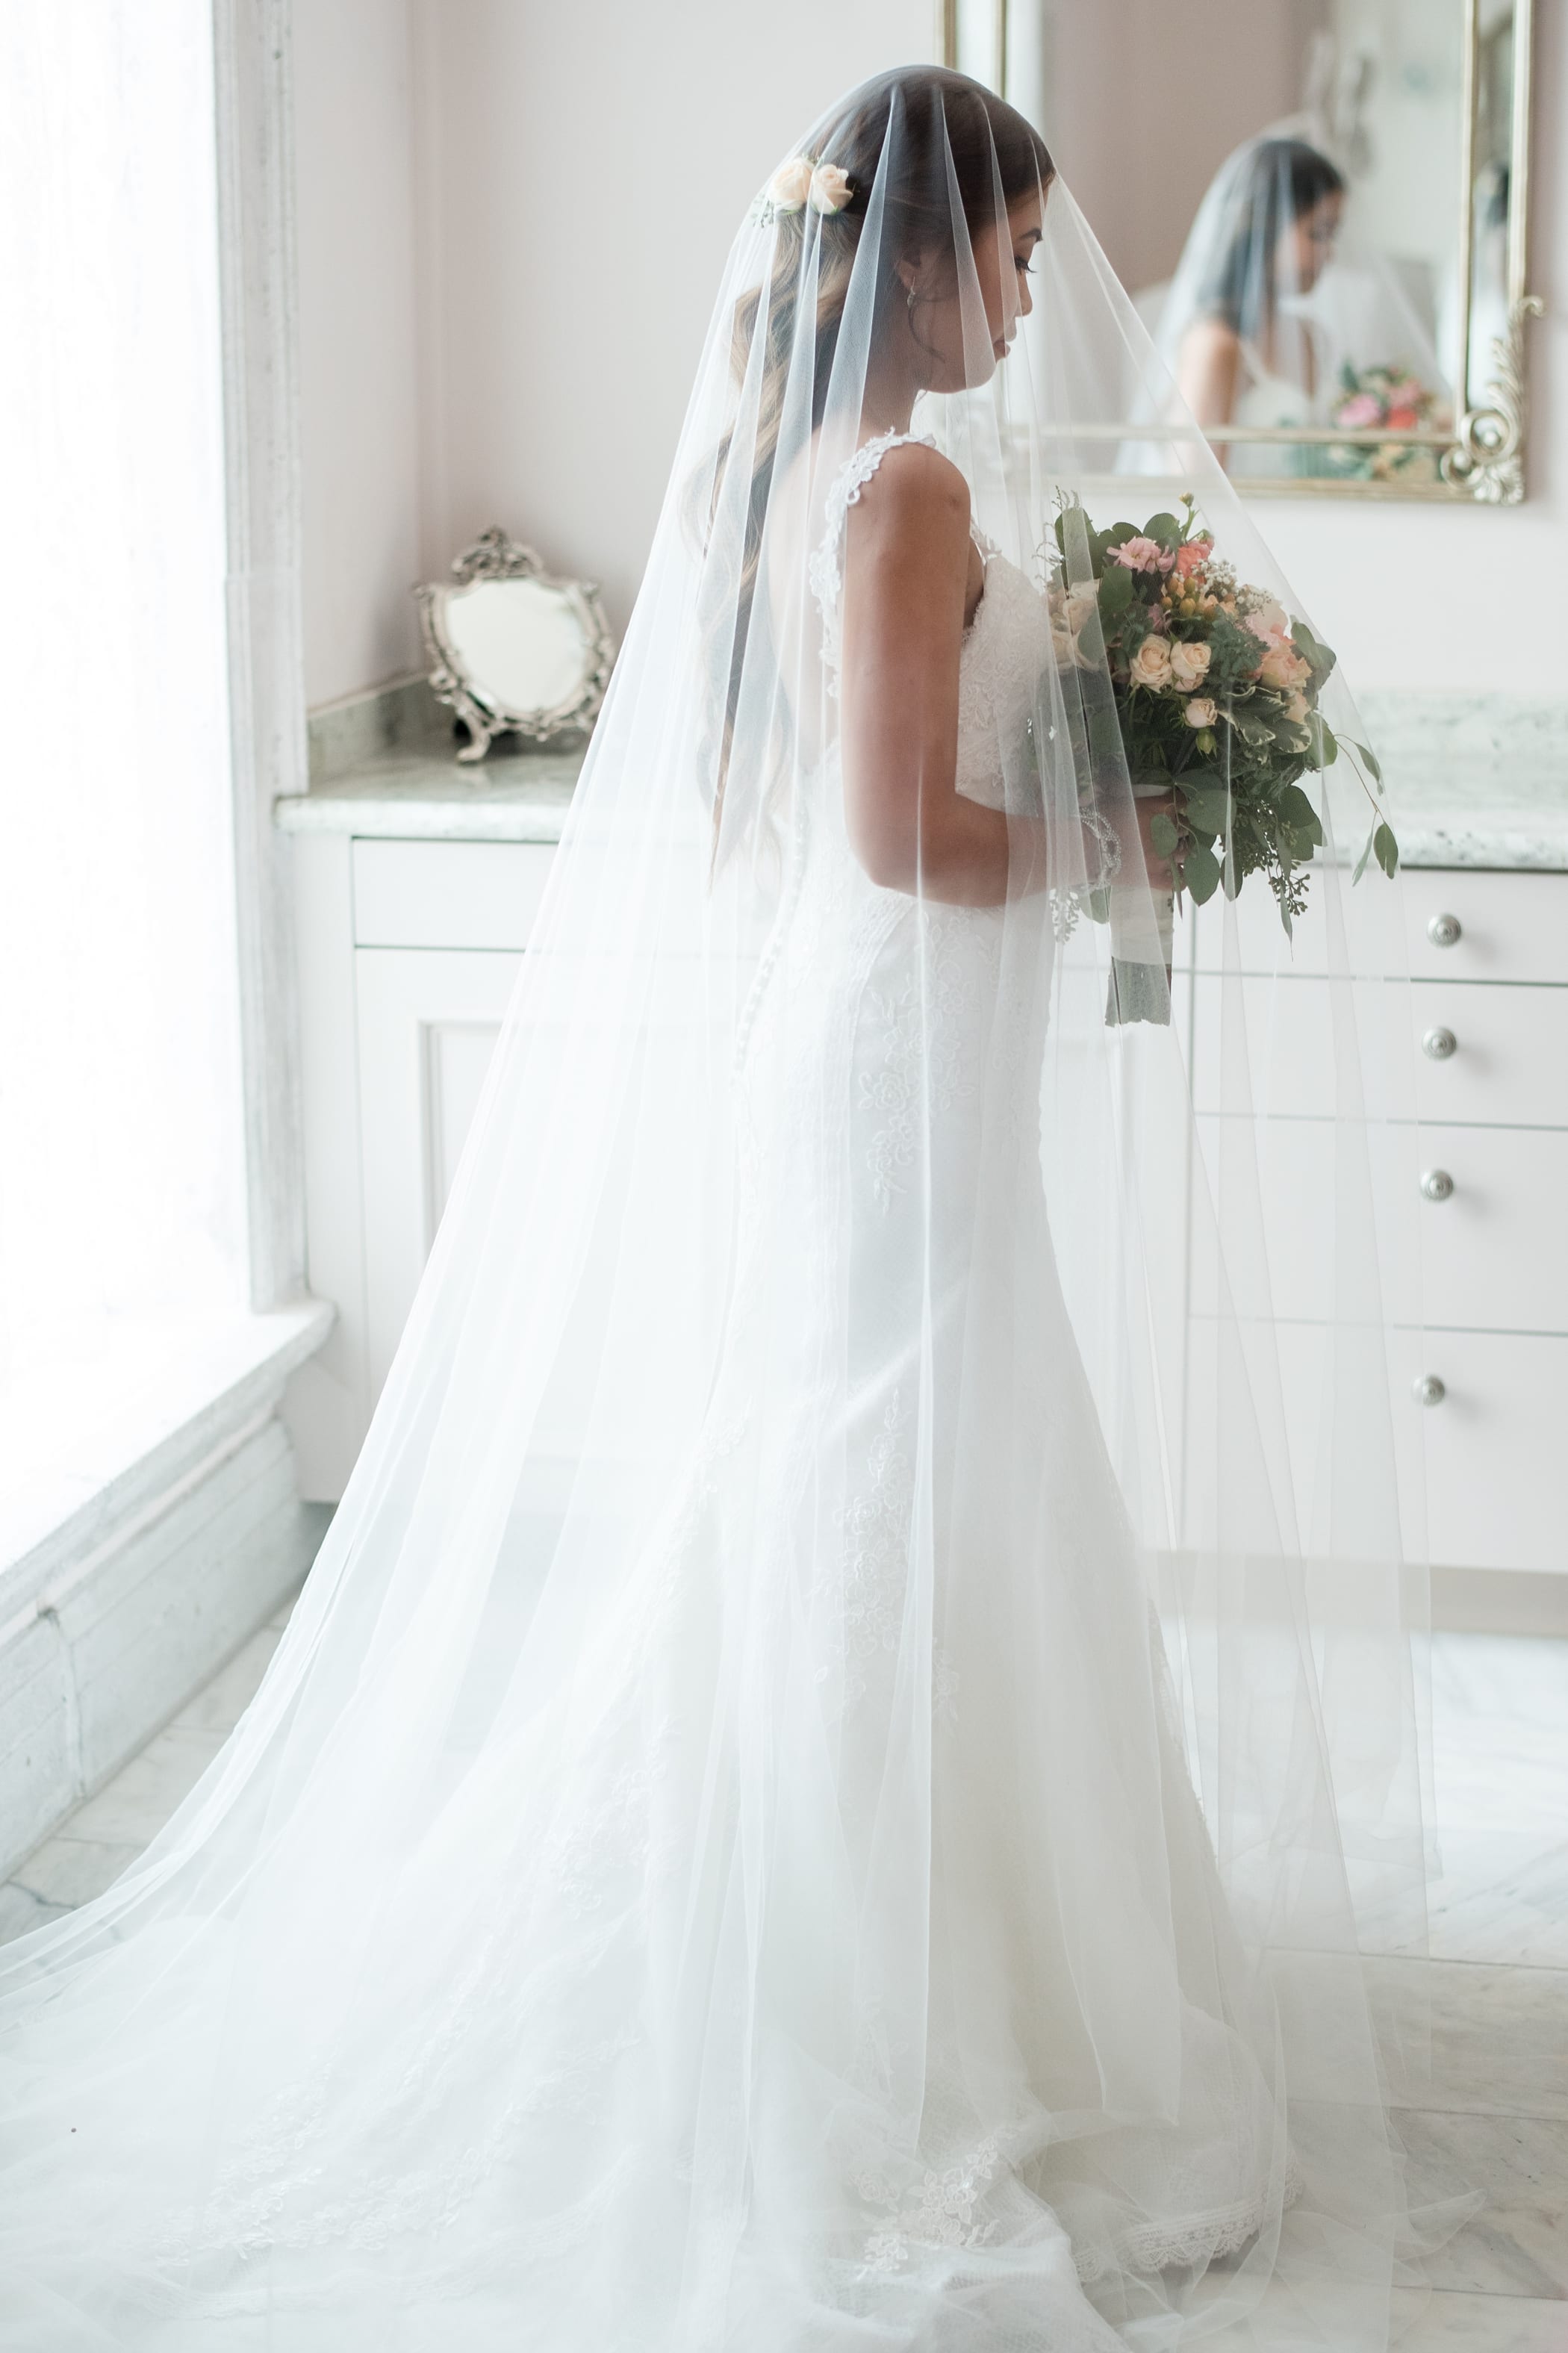 Long veils for brides • blush pink and white bouquet | Michelle & Logan Photo+Films